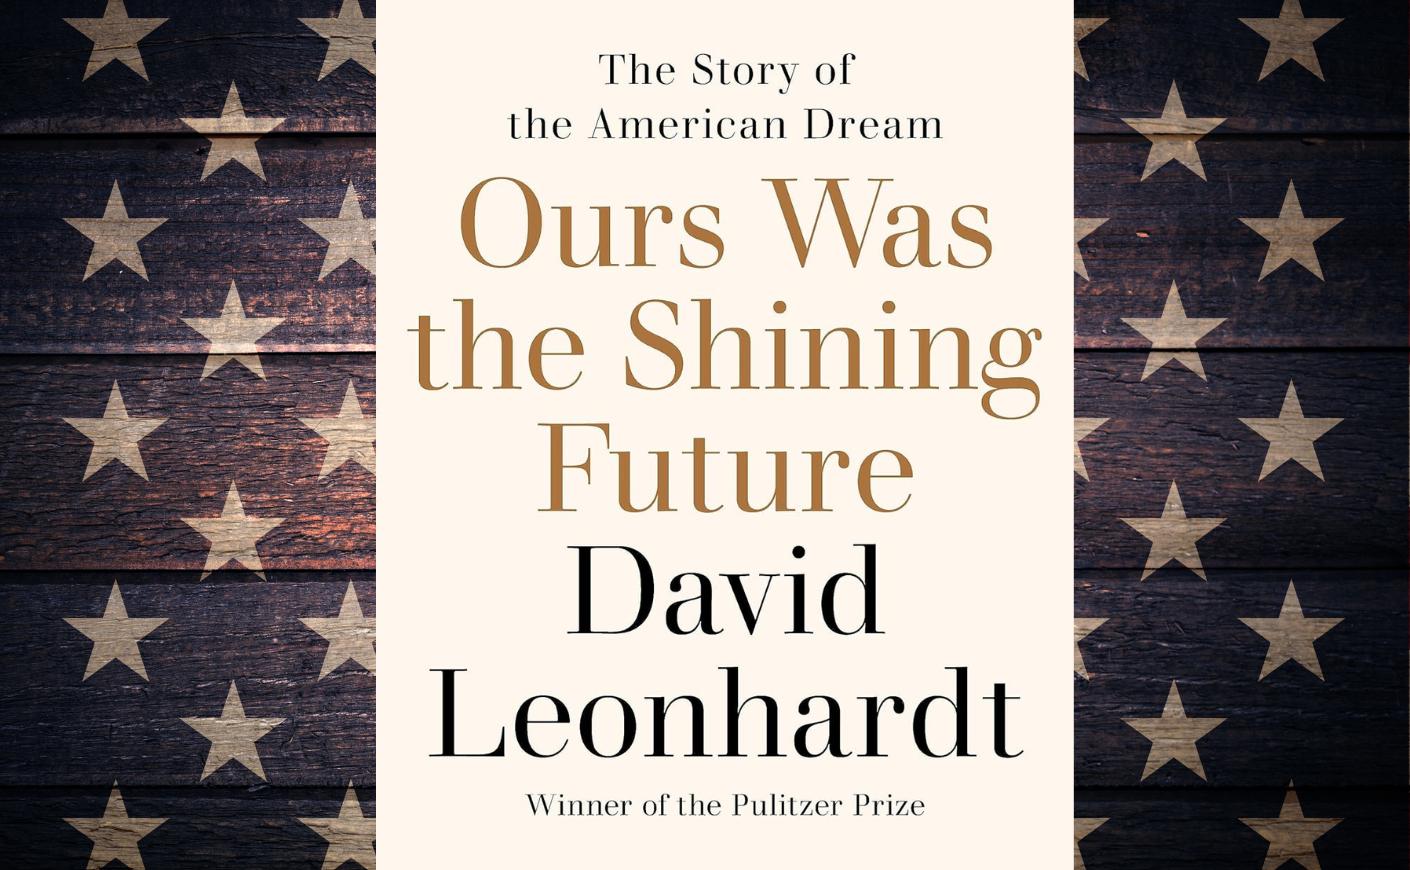 david leonhardt's book cover over american flag stars